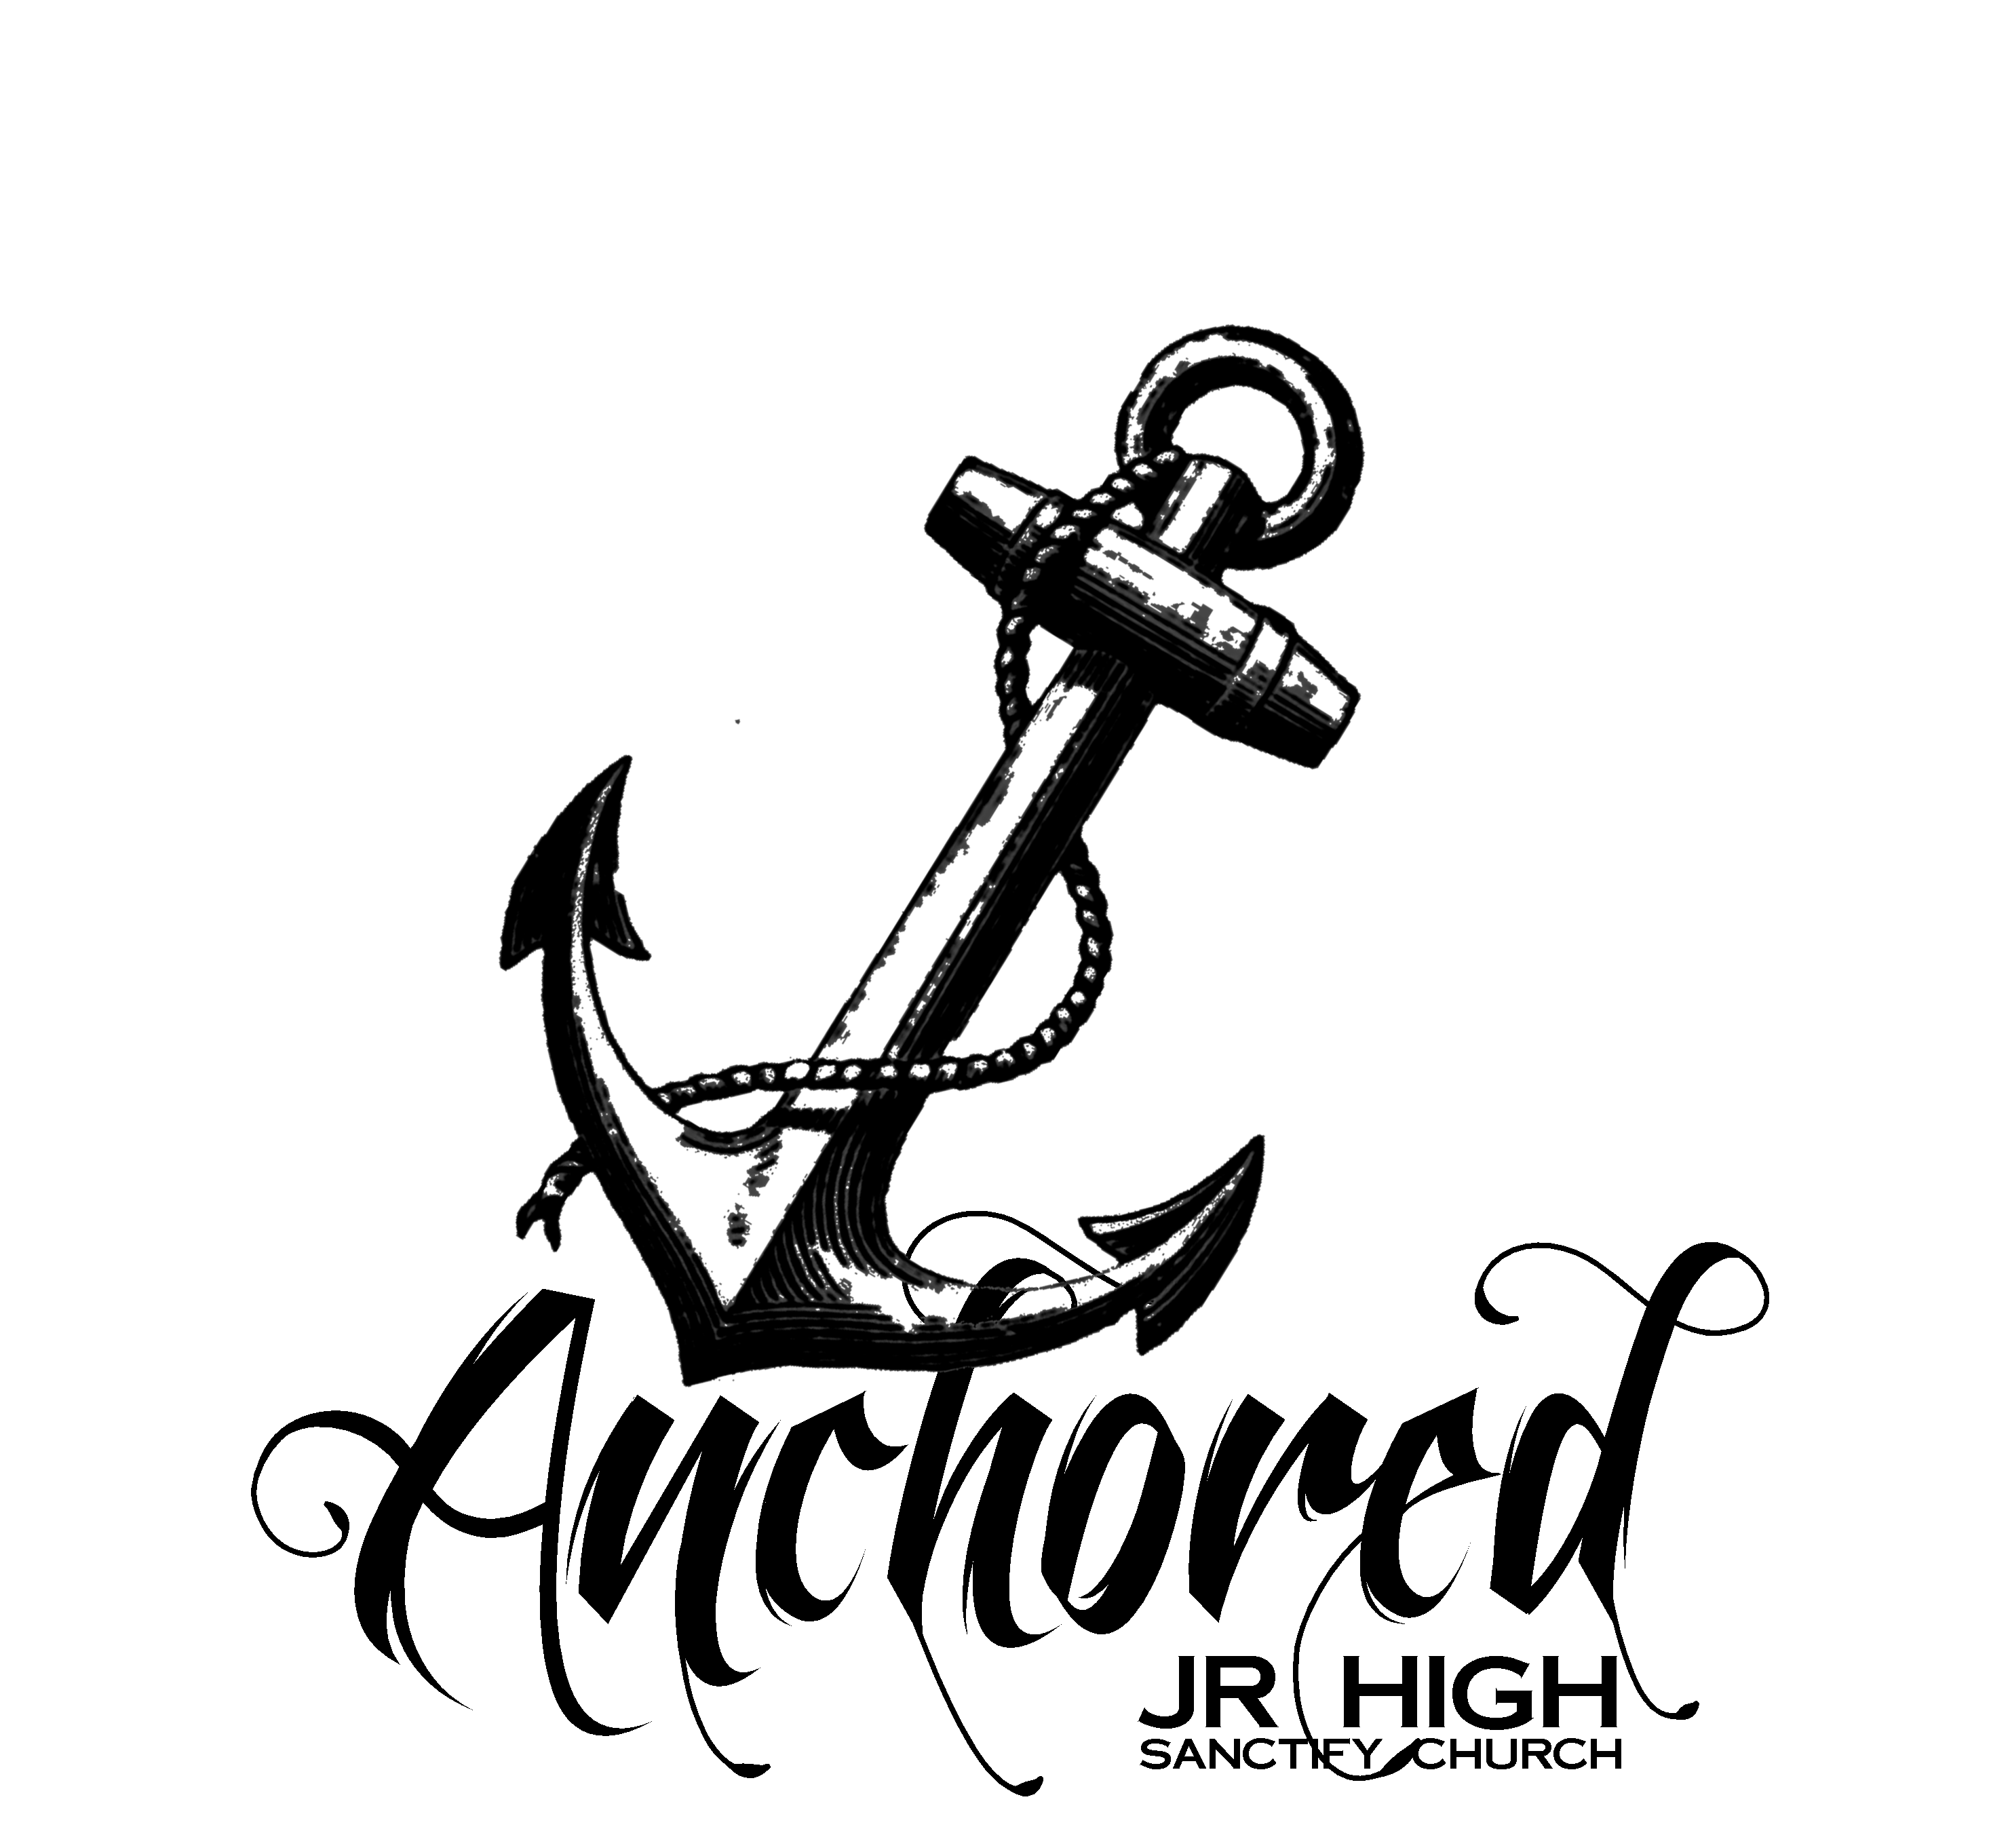 clipart anchor anchored